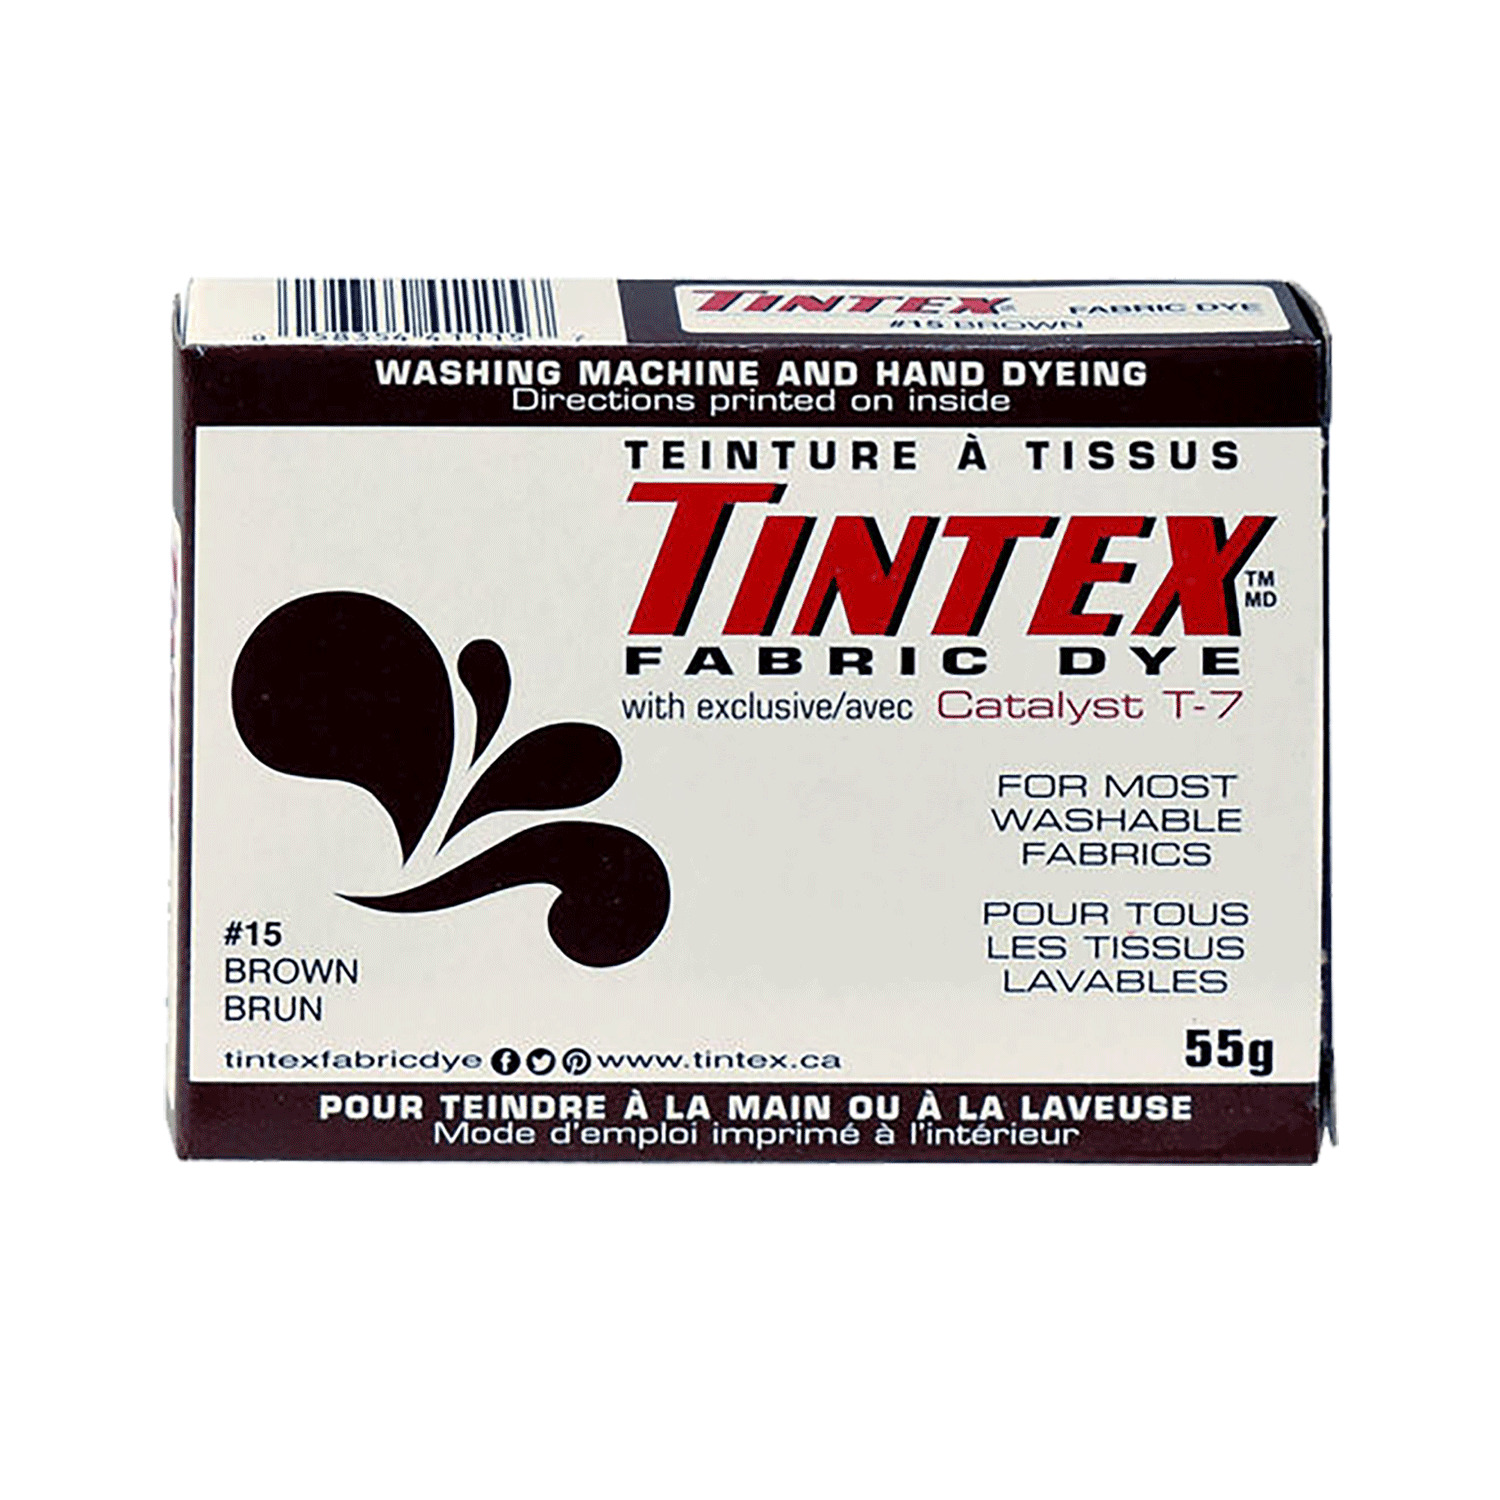 Tintex - All purpose fabric dye - #15 Brown